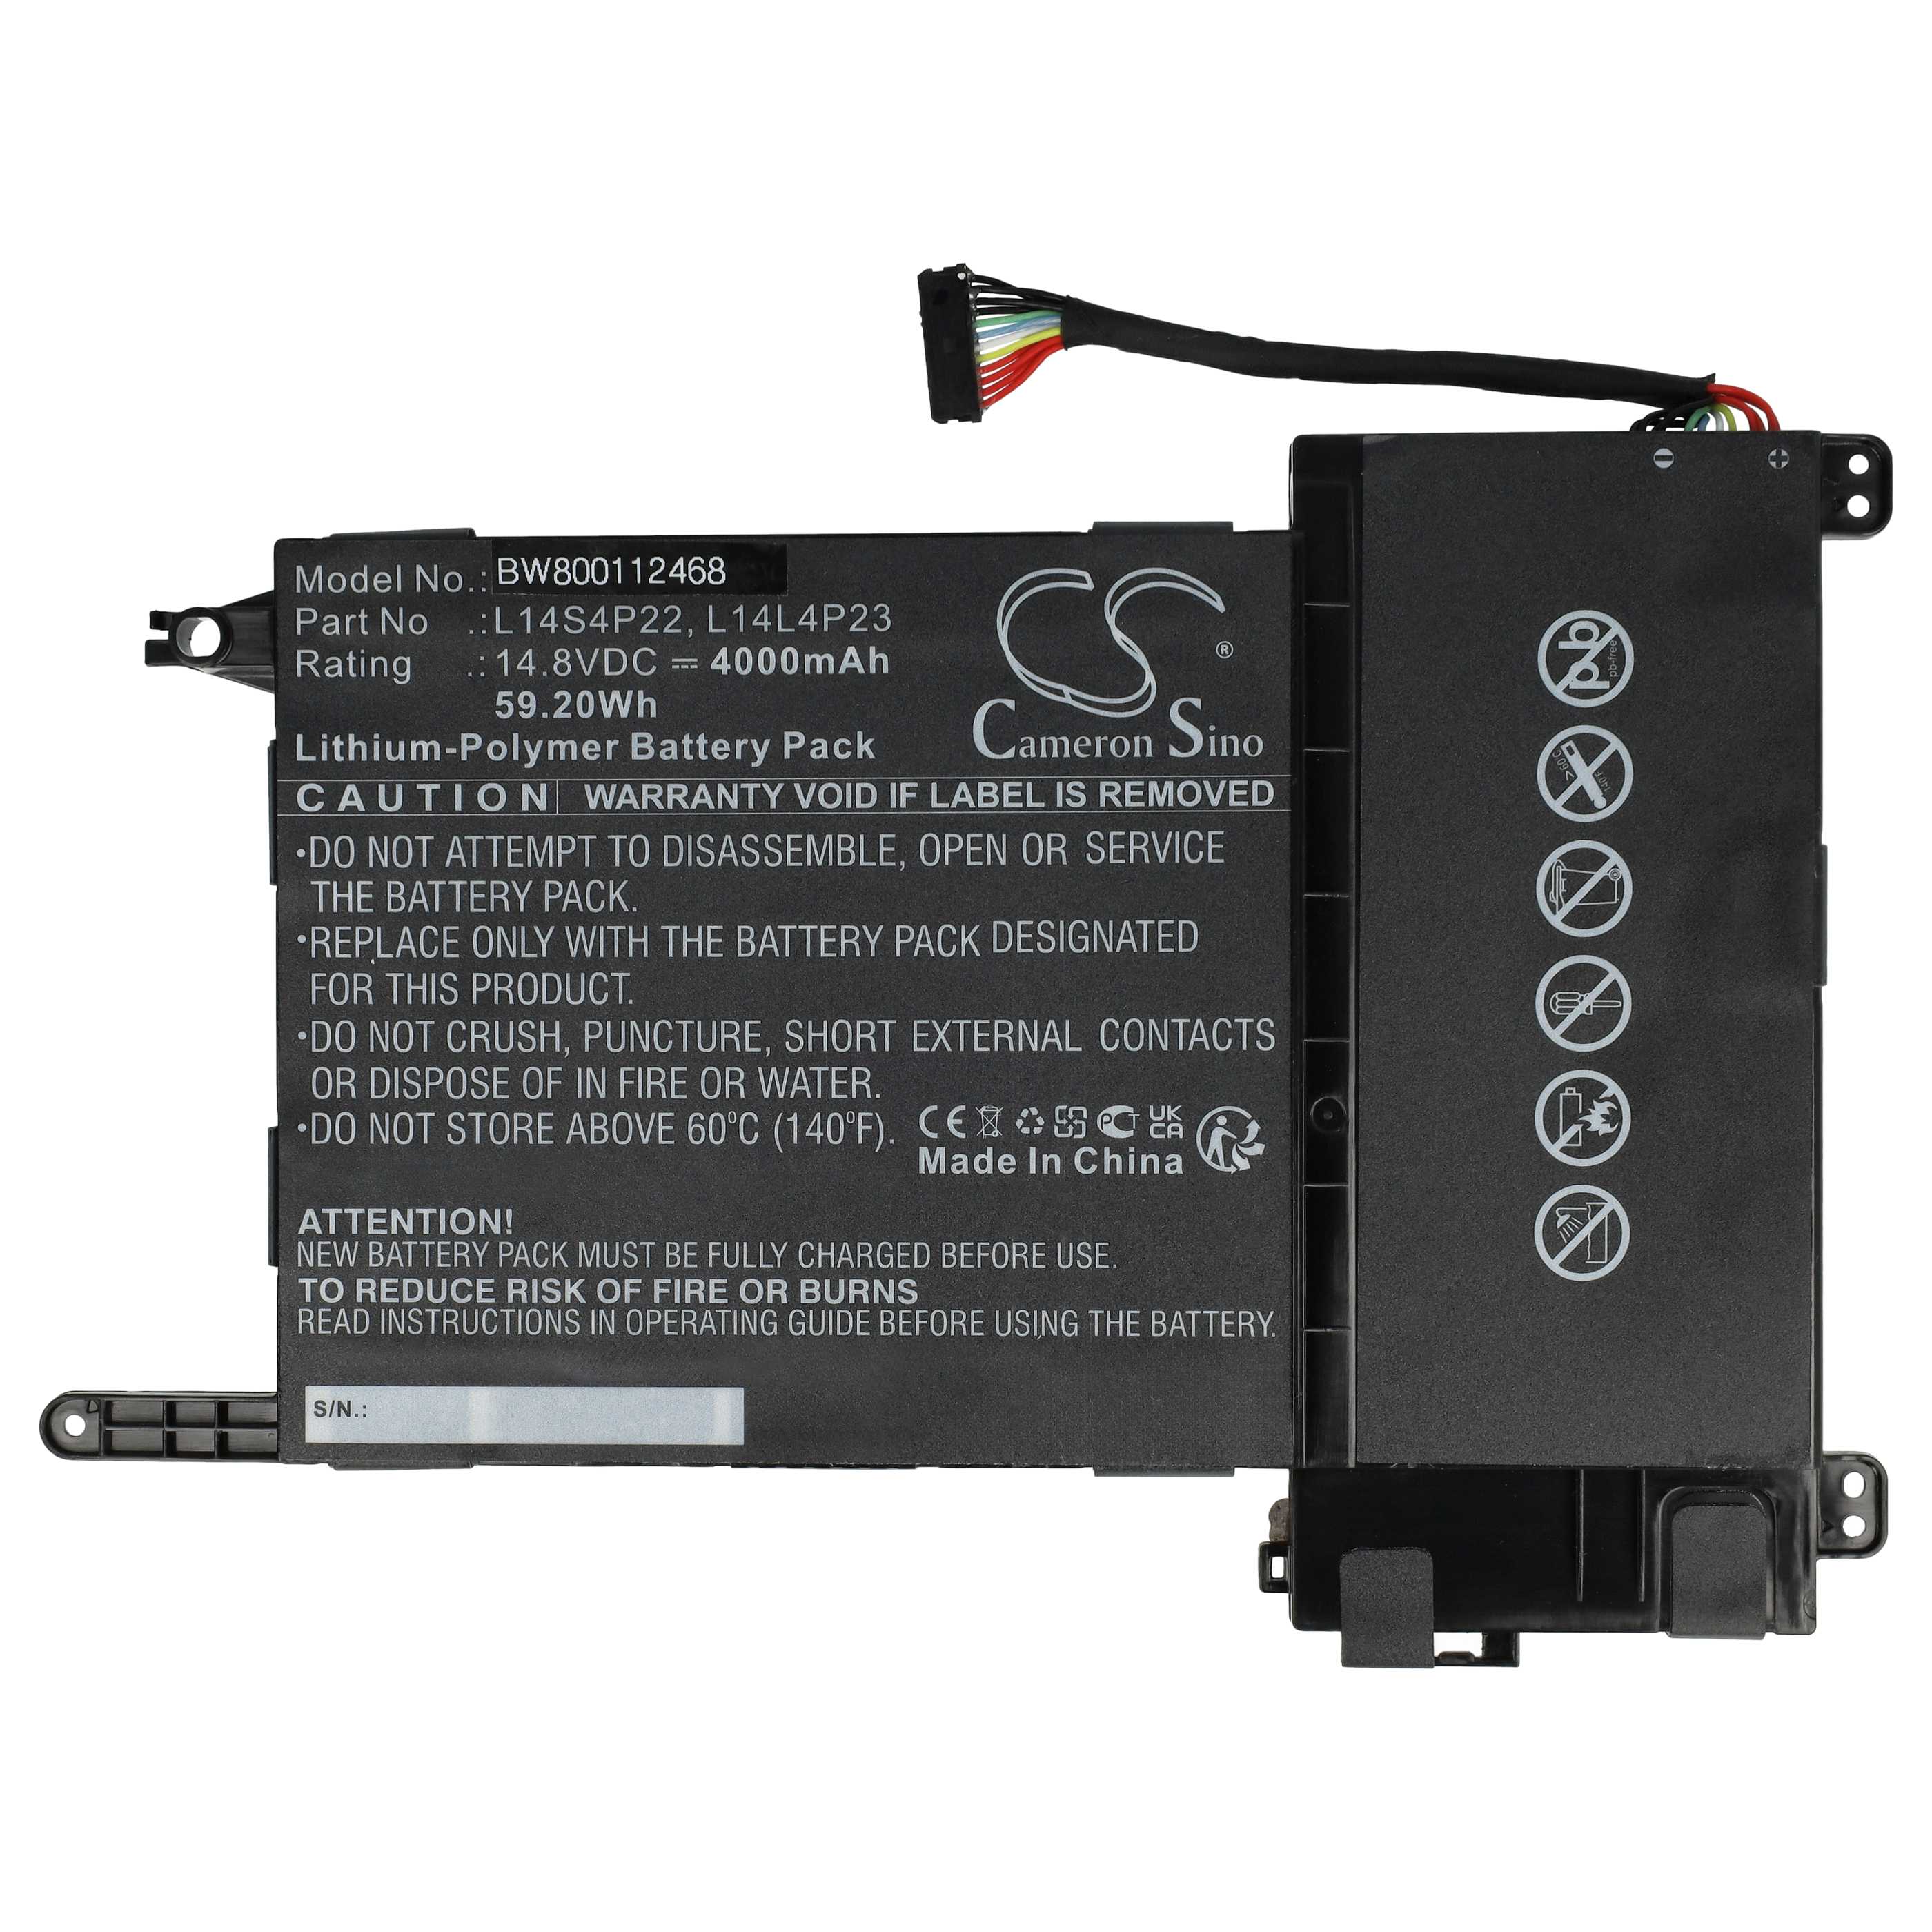 Akumulator do laptopa zamiennik Lenovo L14M4P23, L14L4P23, L14S4P22 - 4000 mAh 14,8 V LiPo, czarny